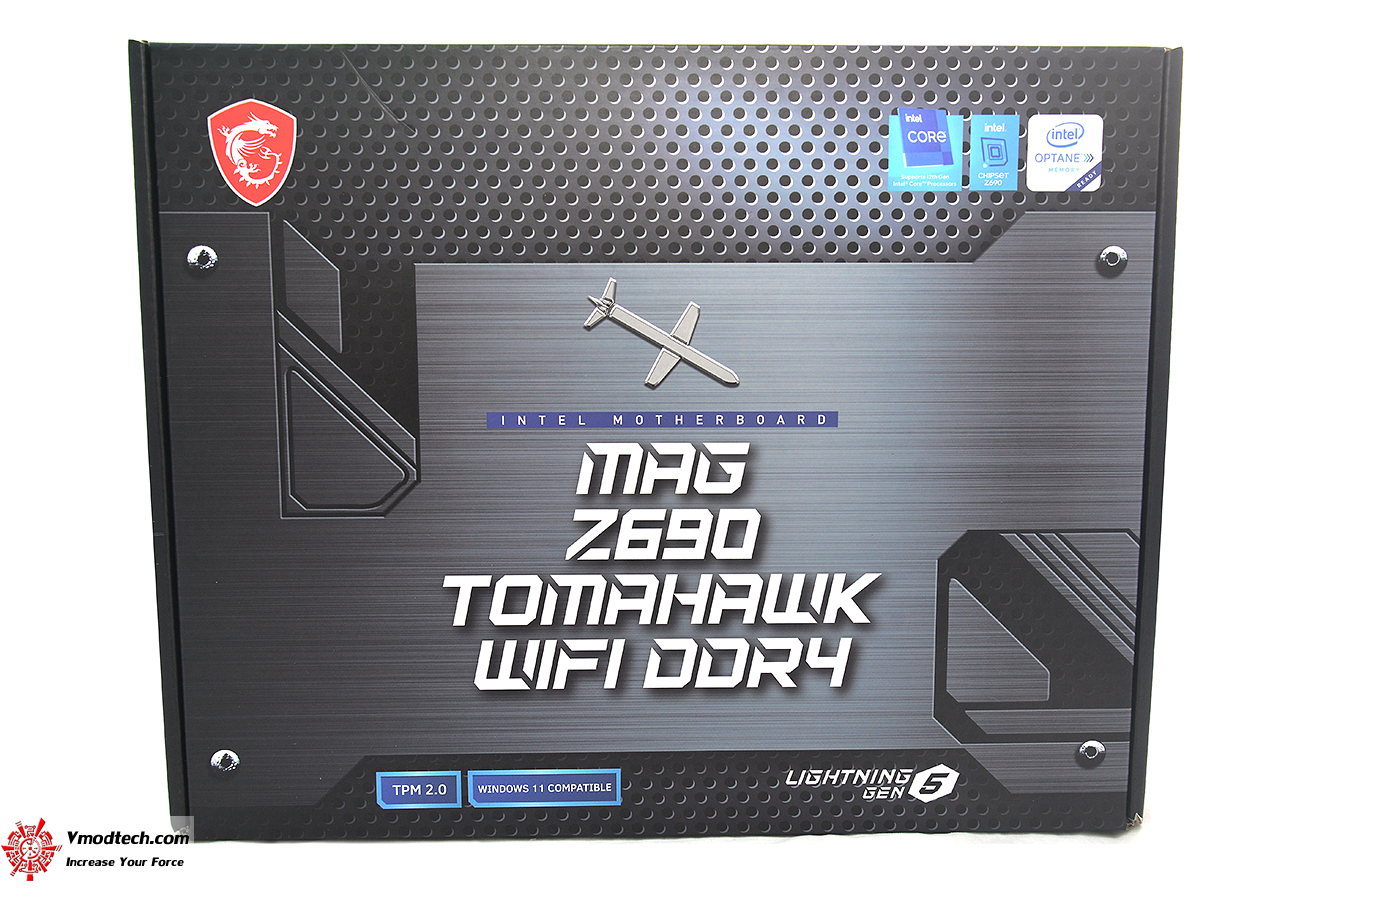 dsc 0148 MSI MAG Z690 TOMAHAWK WIFI DDR4 REVIEW